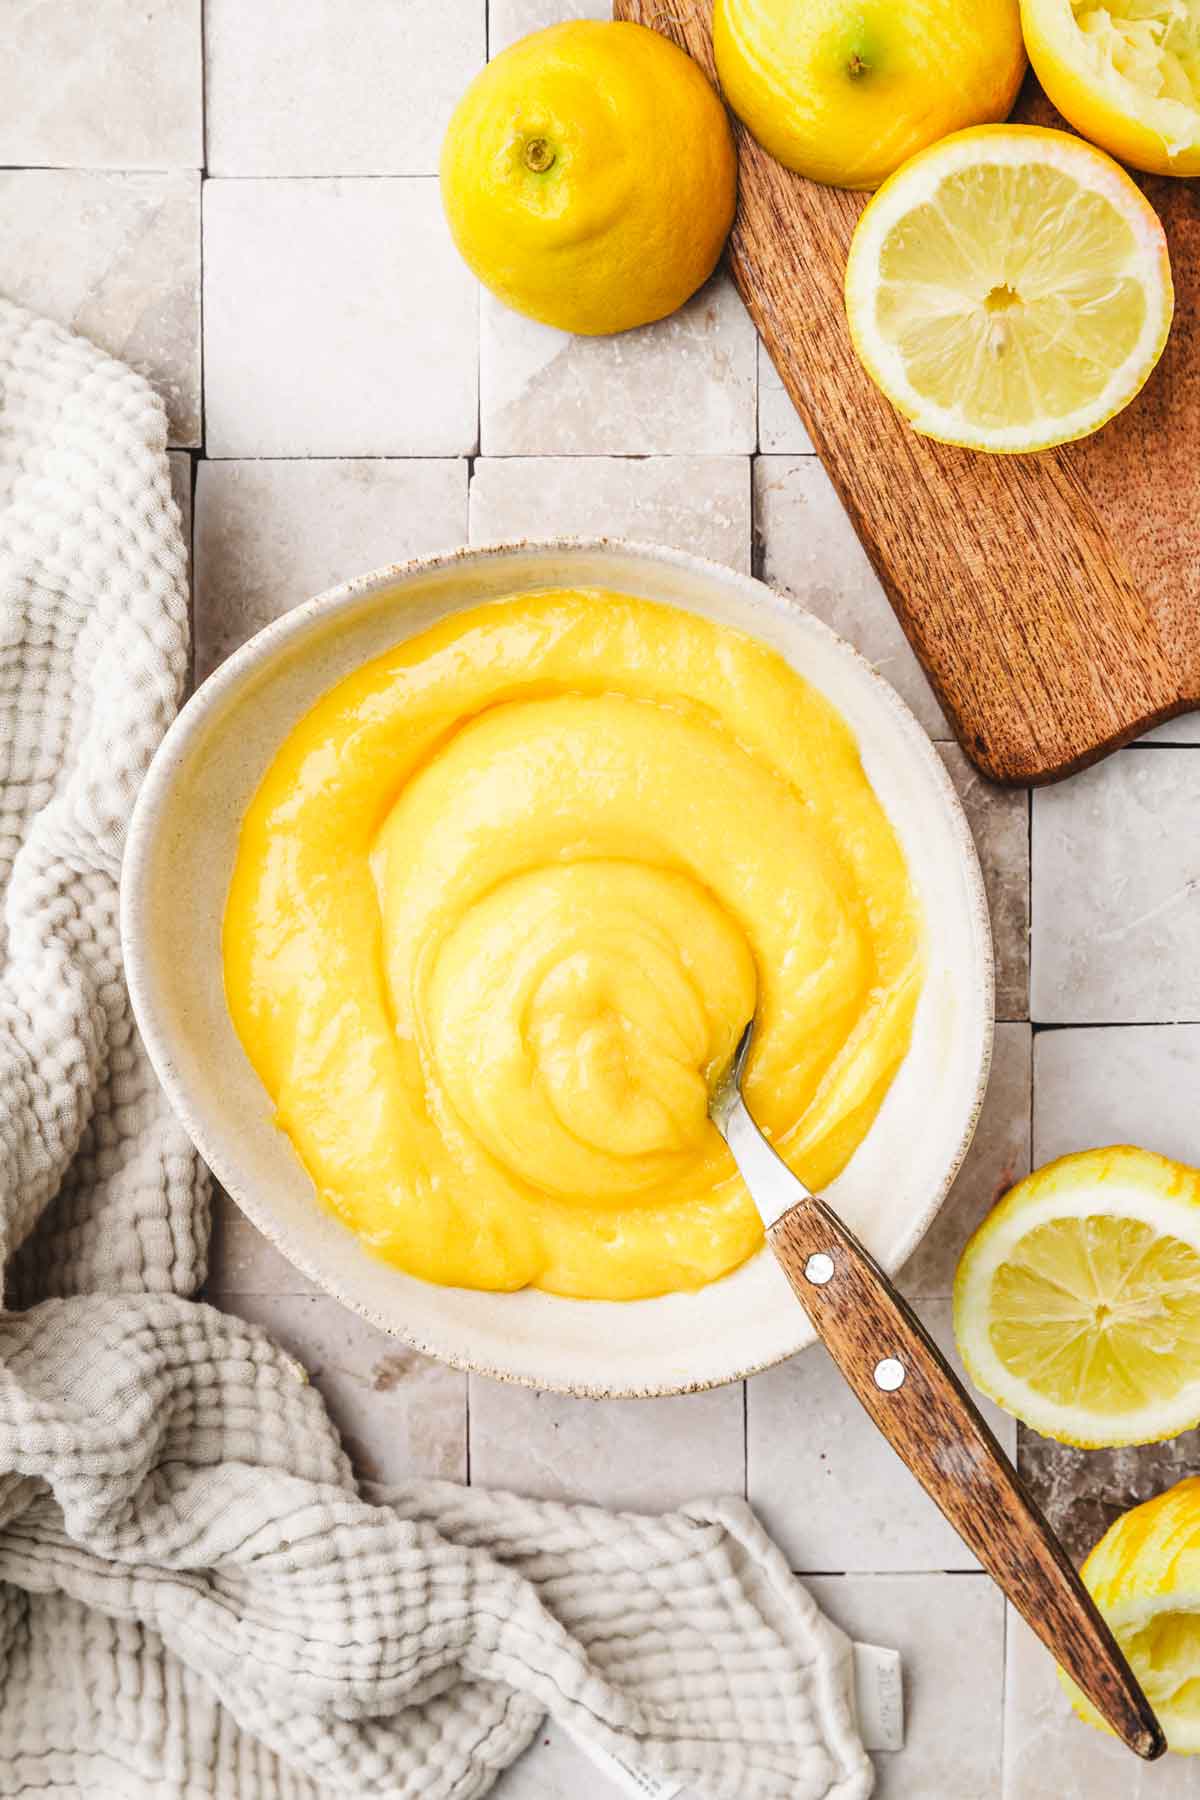 Bowl with lemon curd filling